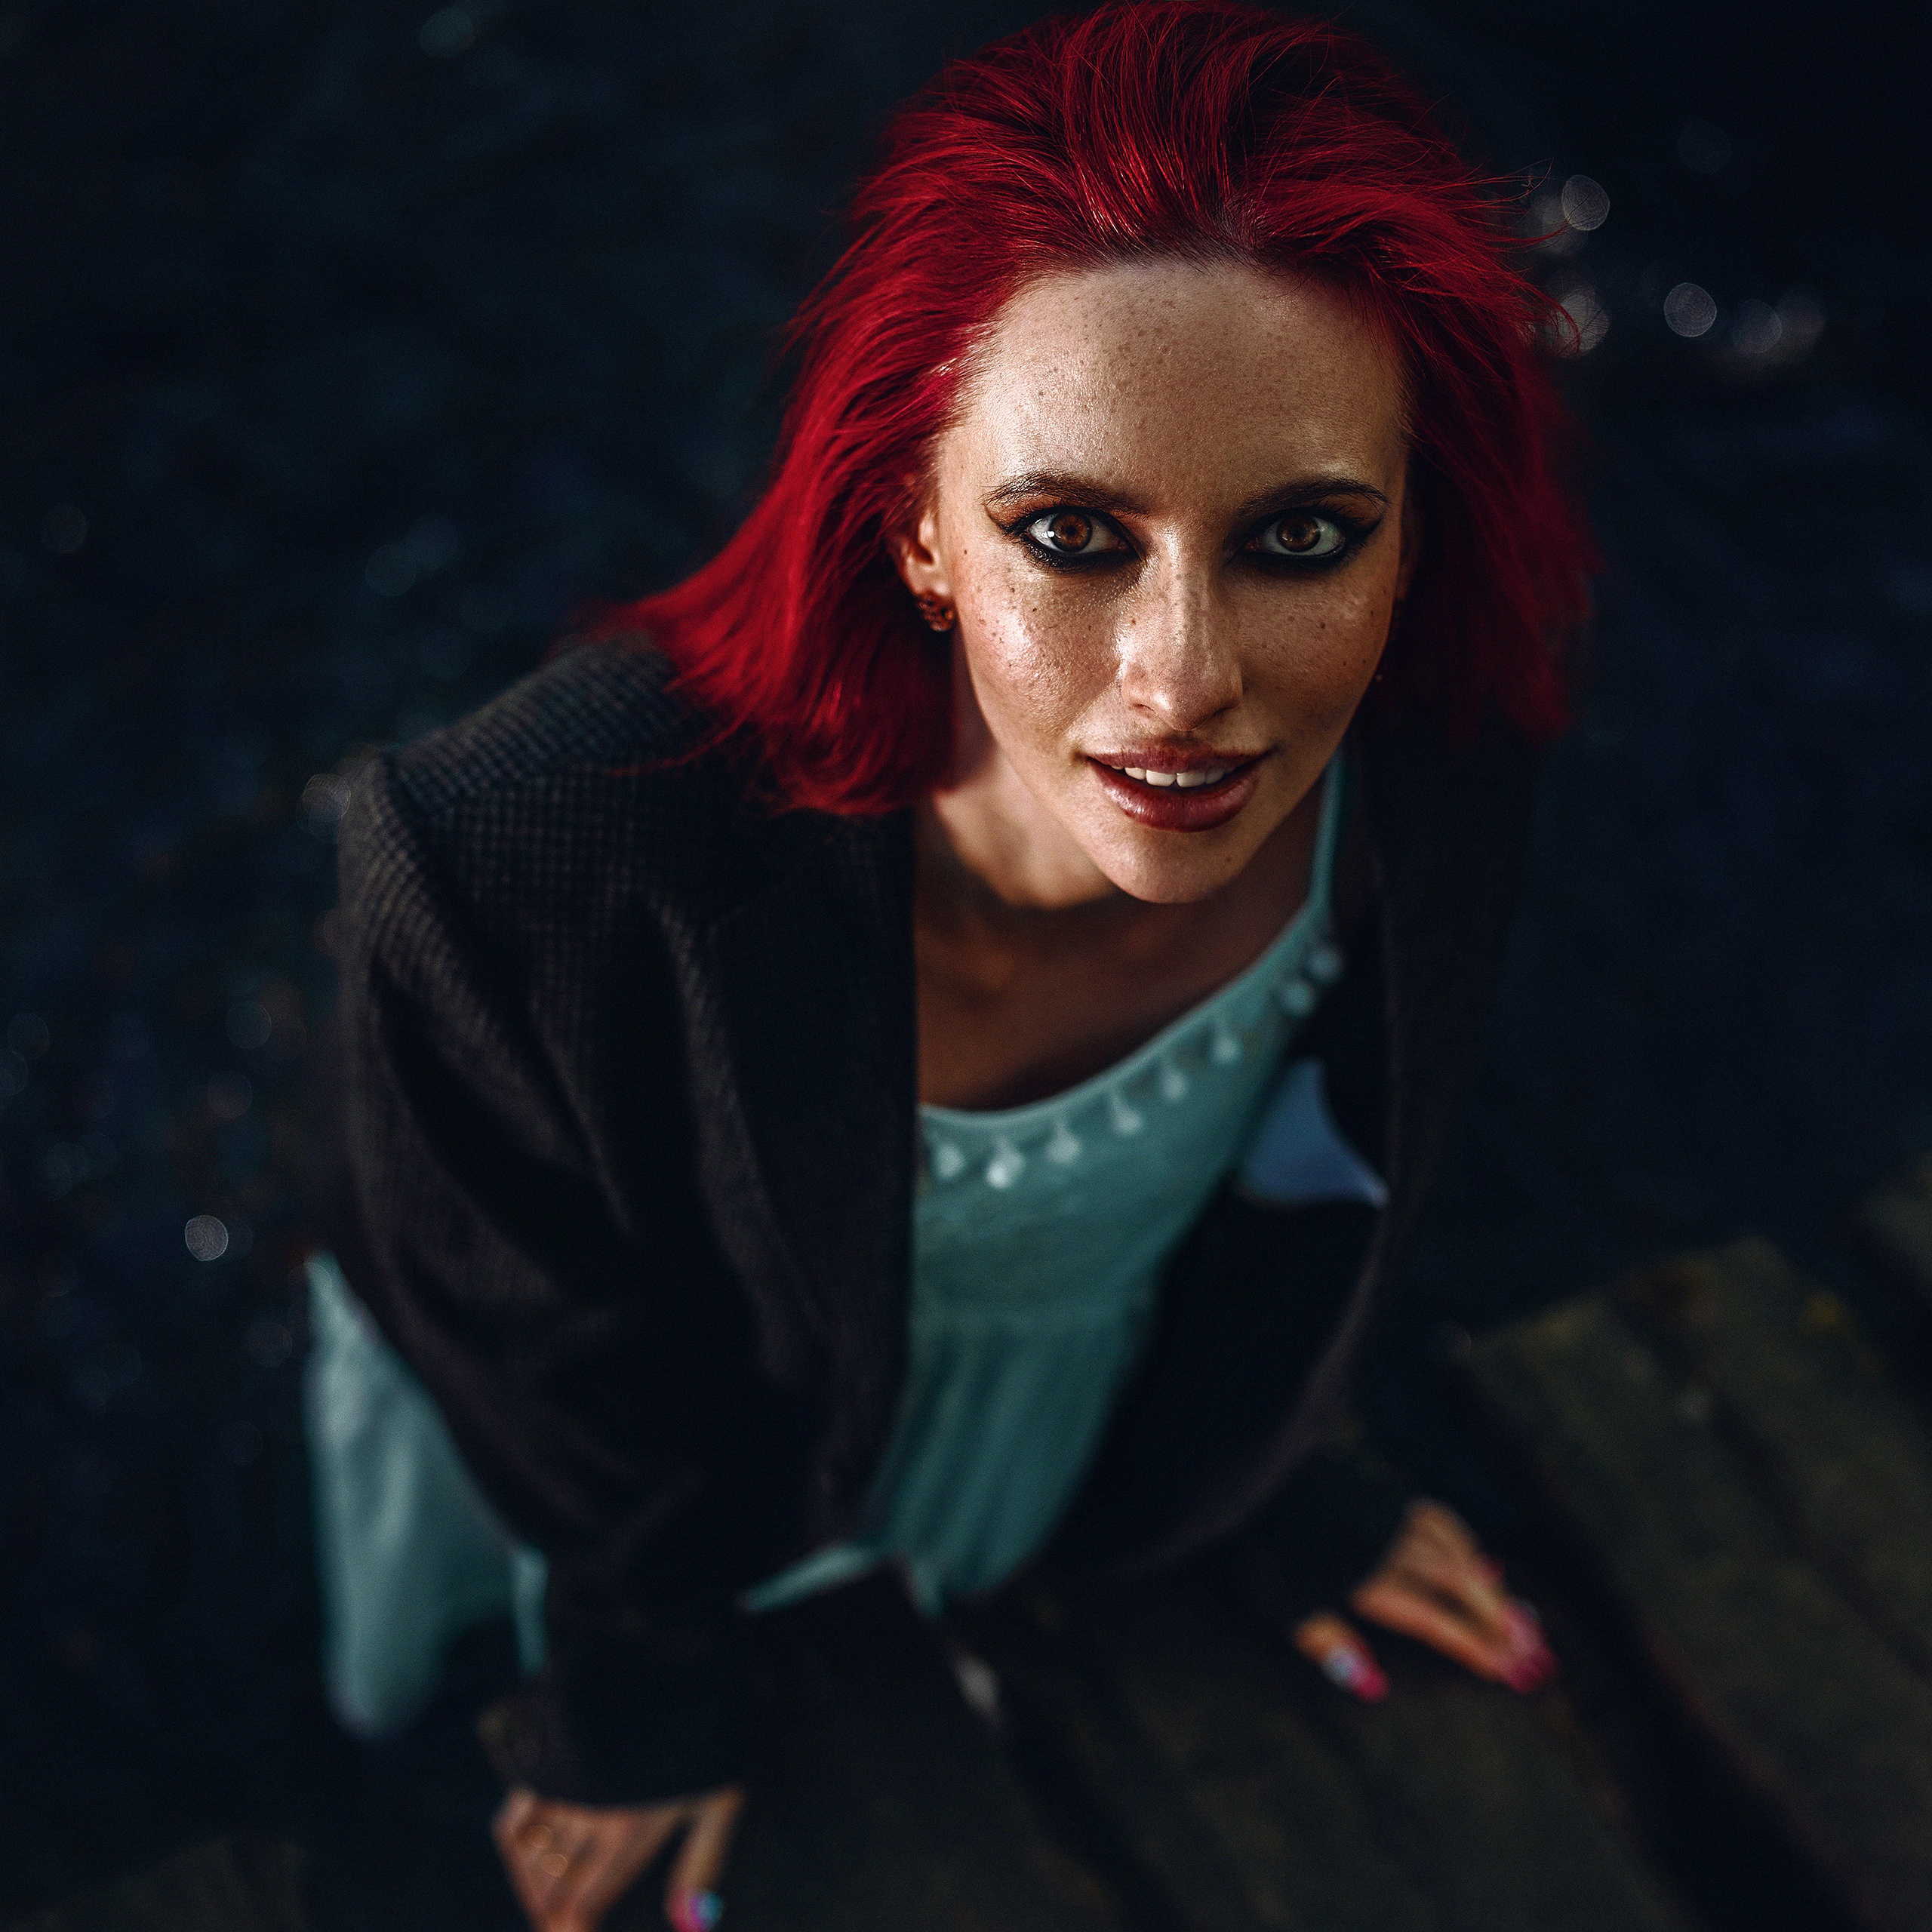 People 2560x2560 Alex Wolf women redhead makeup high angle portrait portrait display